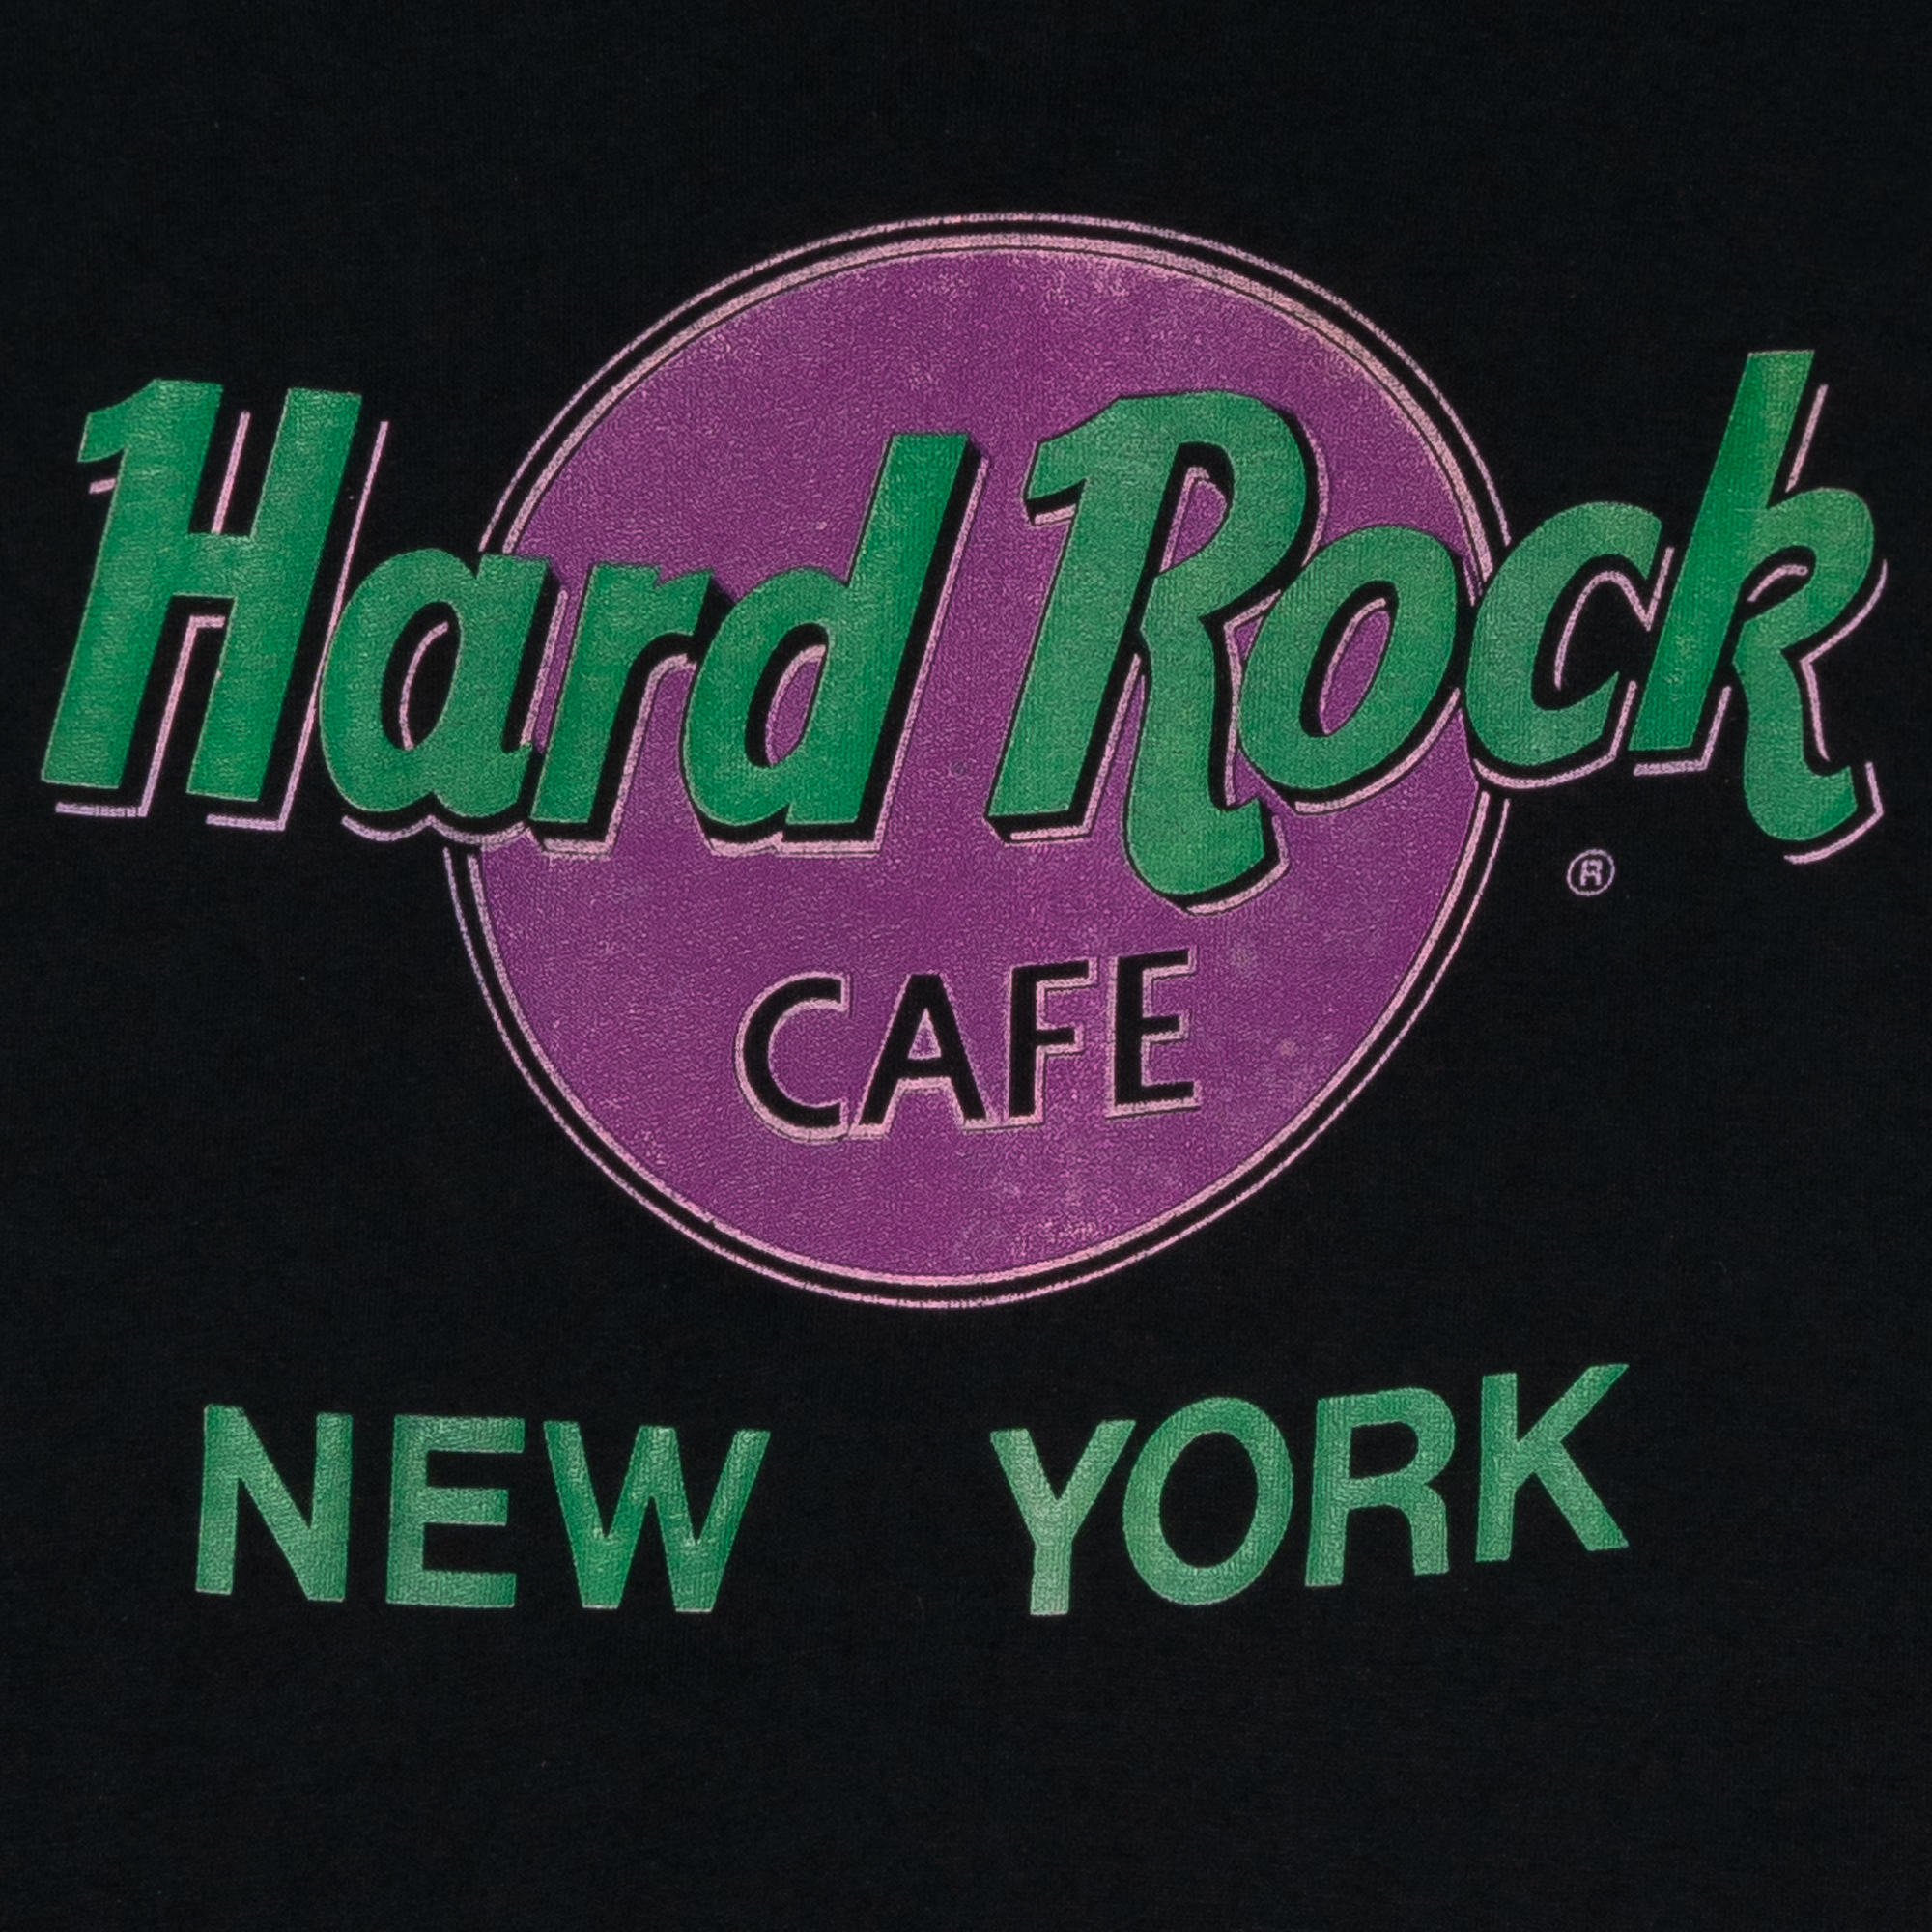 Hard Rock Cafe "New York" Souvenir Tee Black-PLUS